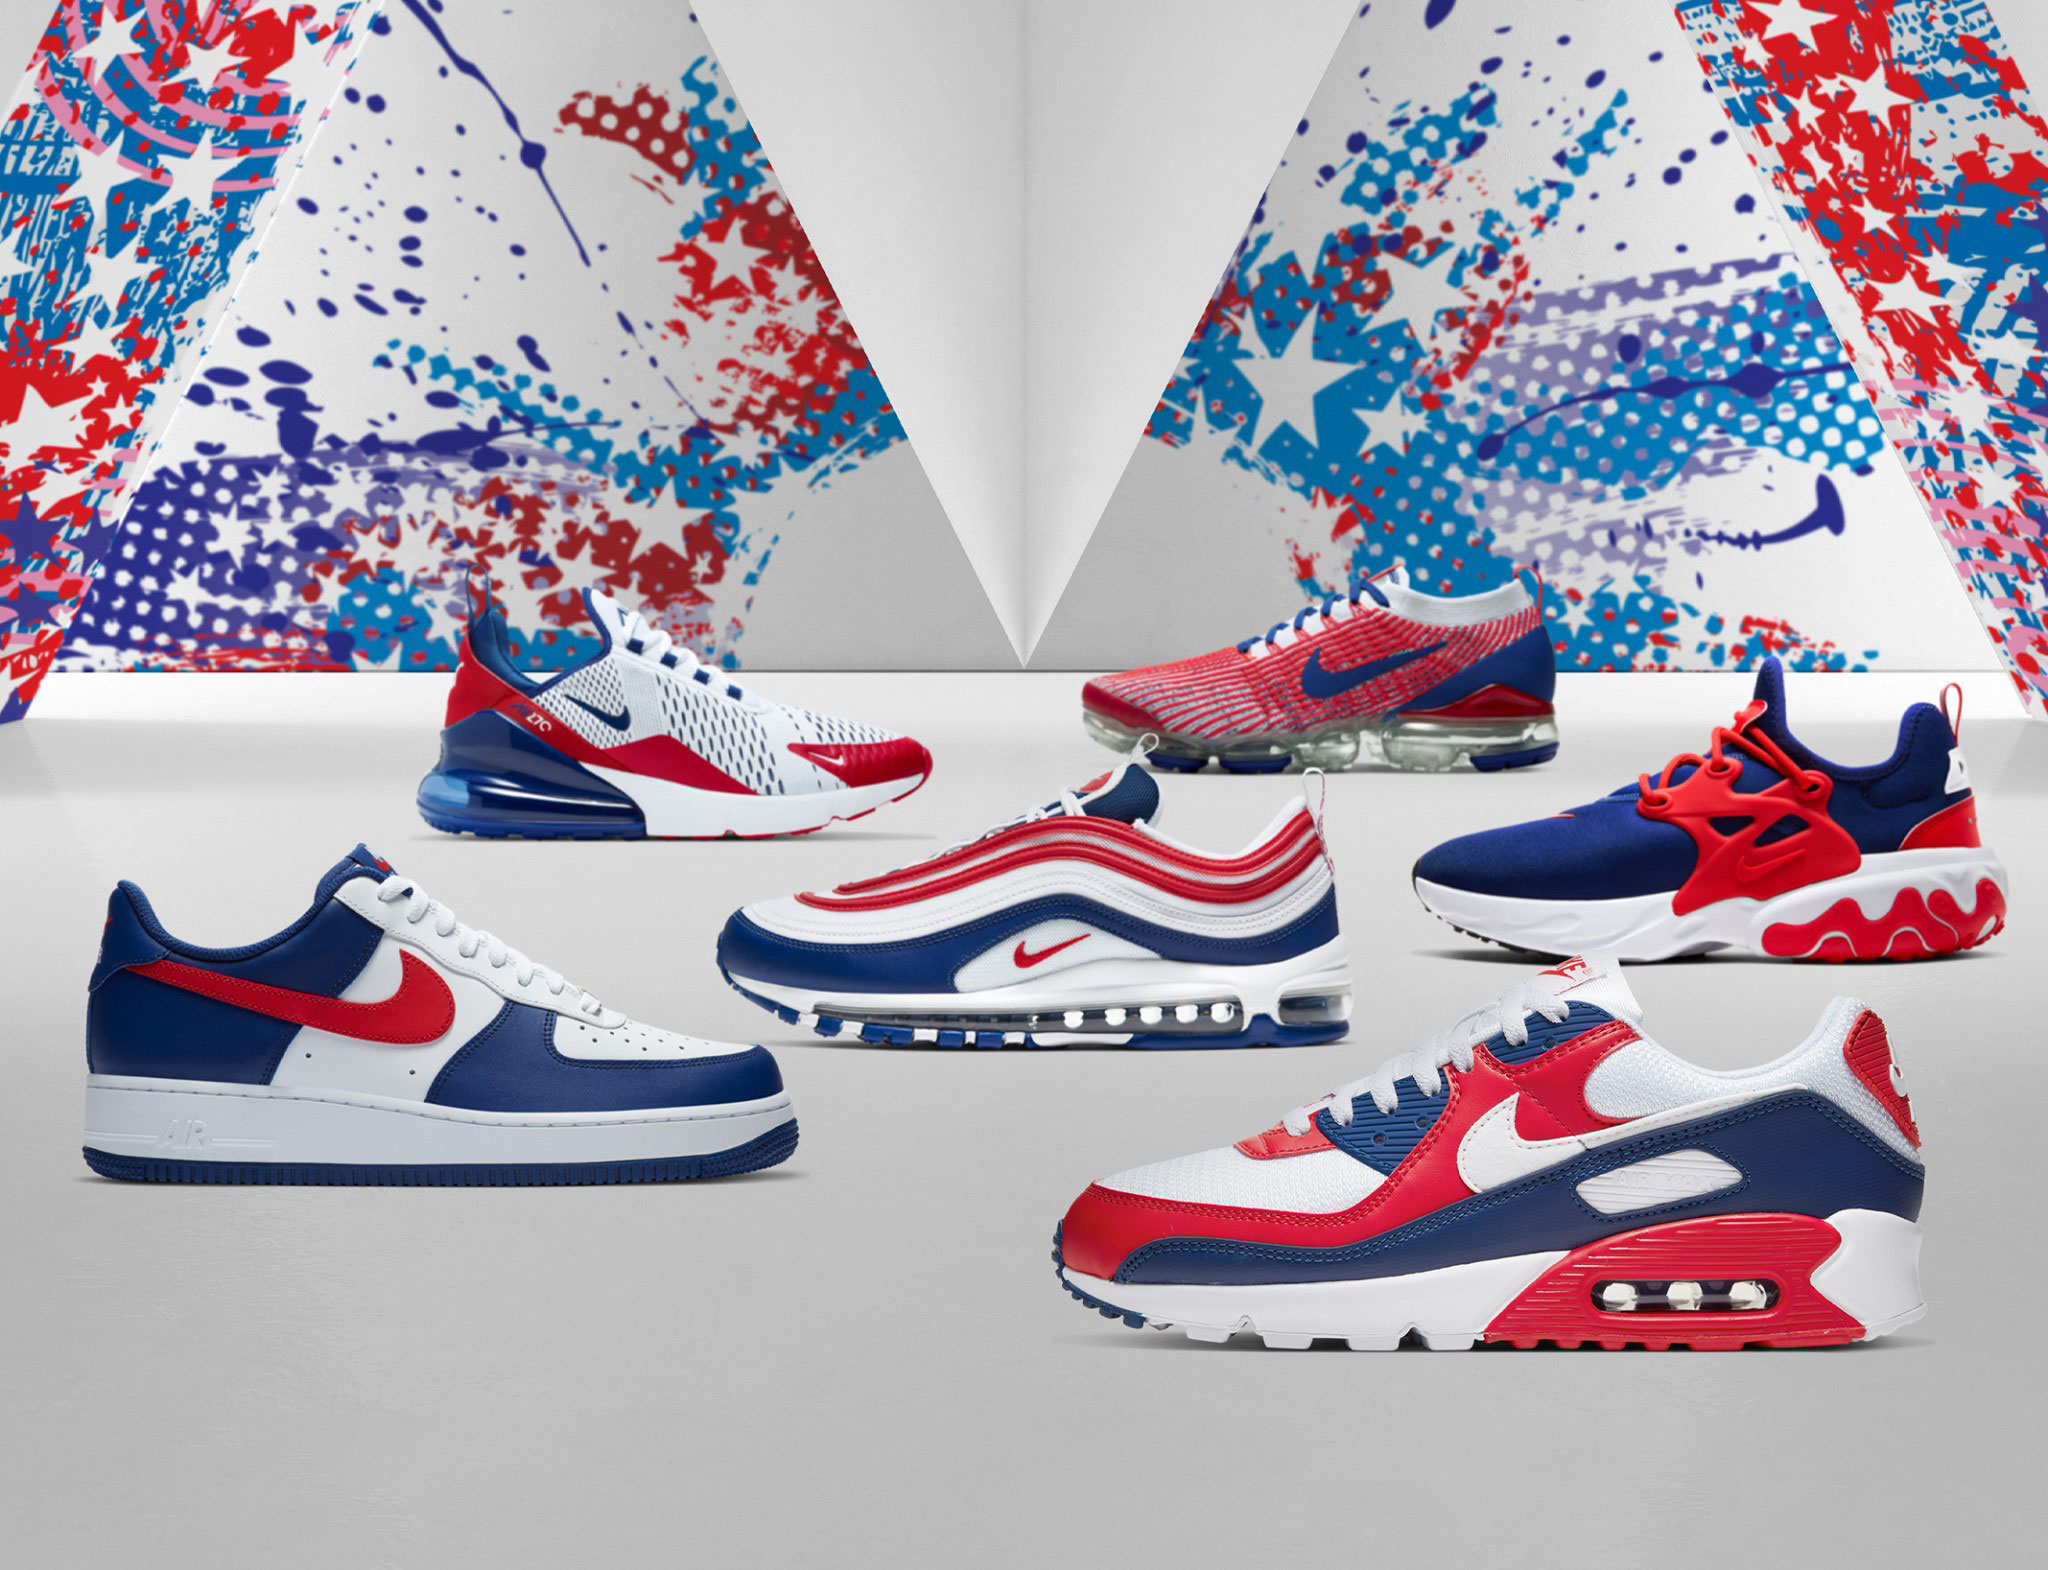 Nike Americana Sneakers and Apparel for Memorial Day 2020 | SneakerFits.com